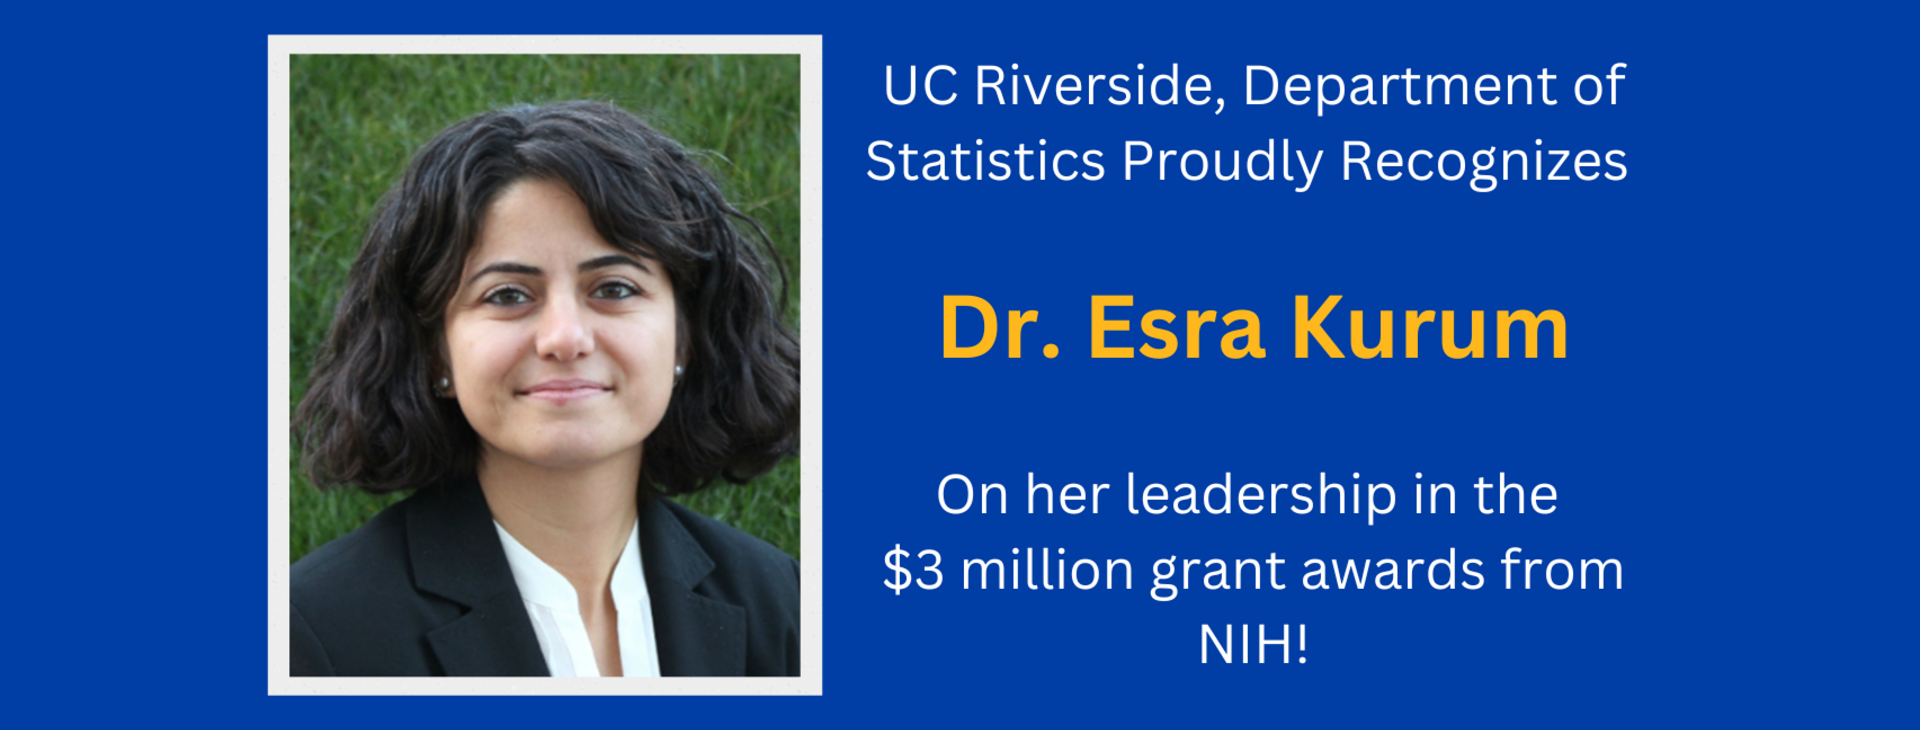 Esra Kurum proudly recognized for her leadership in 3 million grant awards from NIH